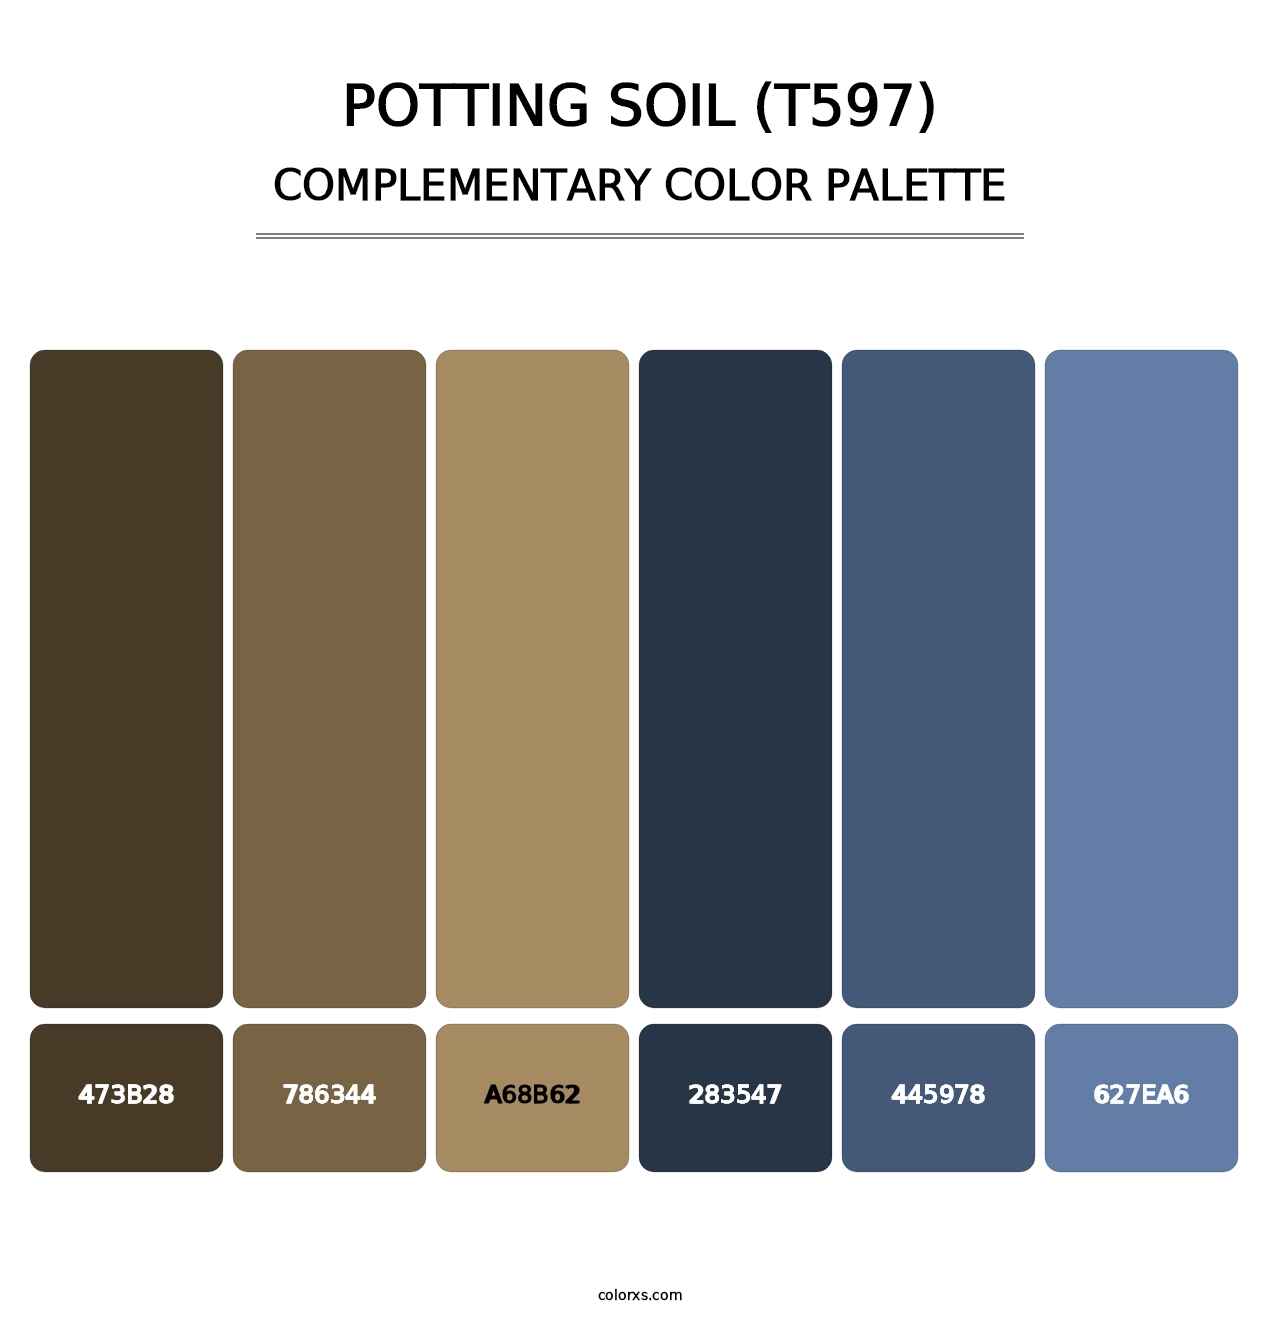 Potting Soil (T597) - Complementary Color Palette